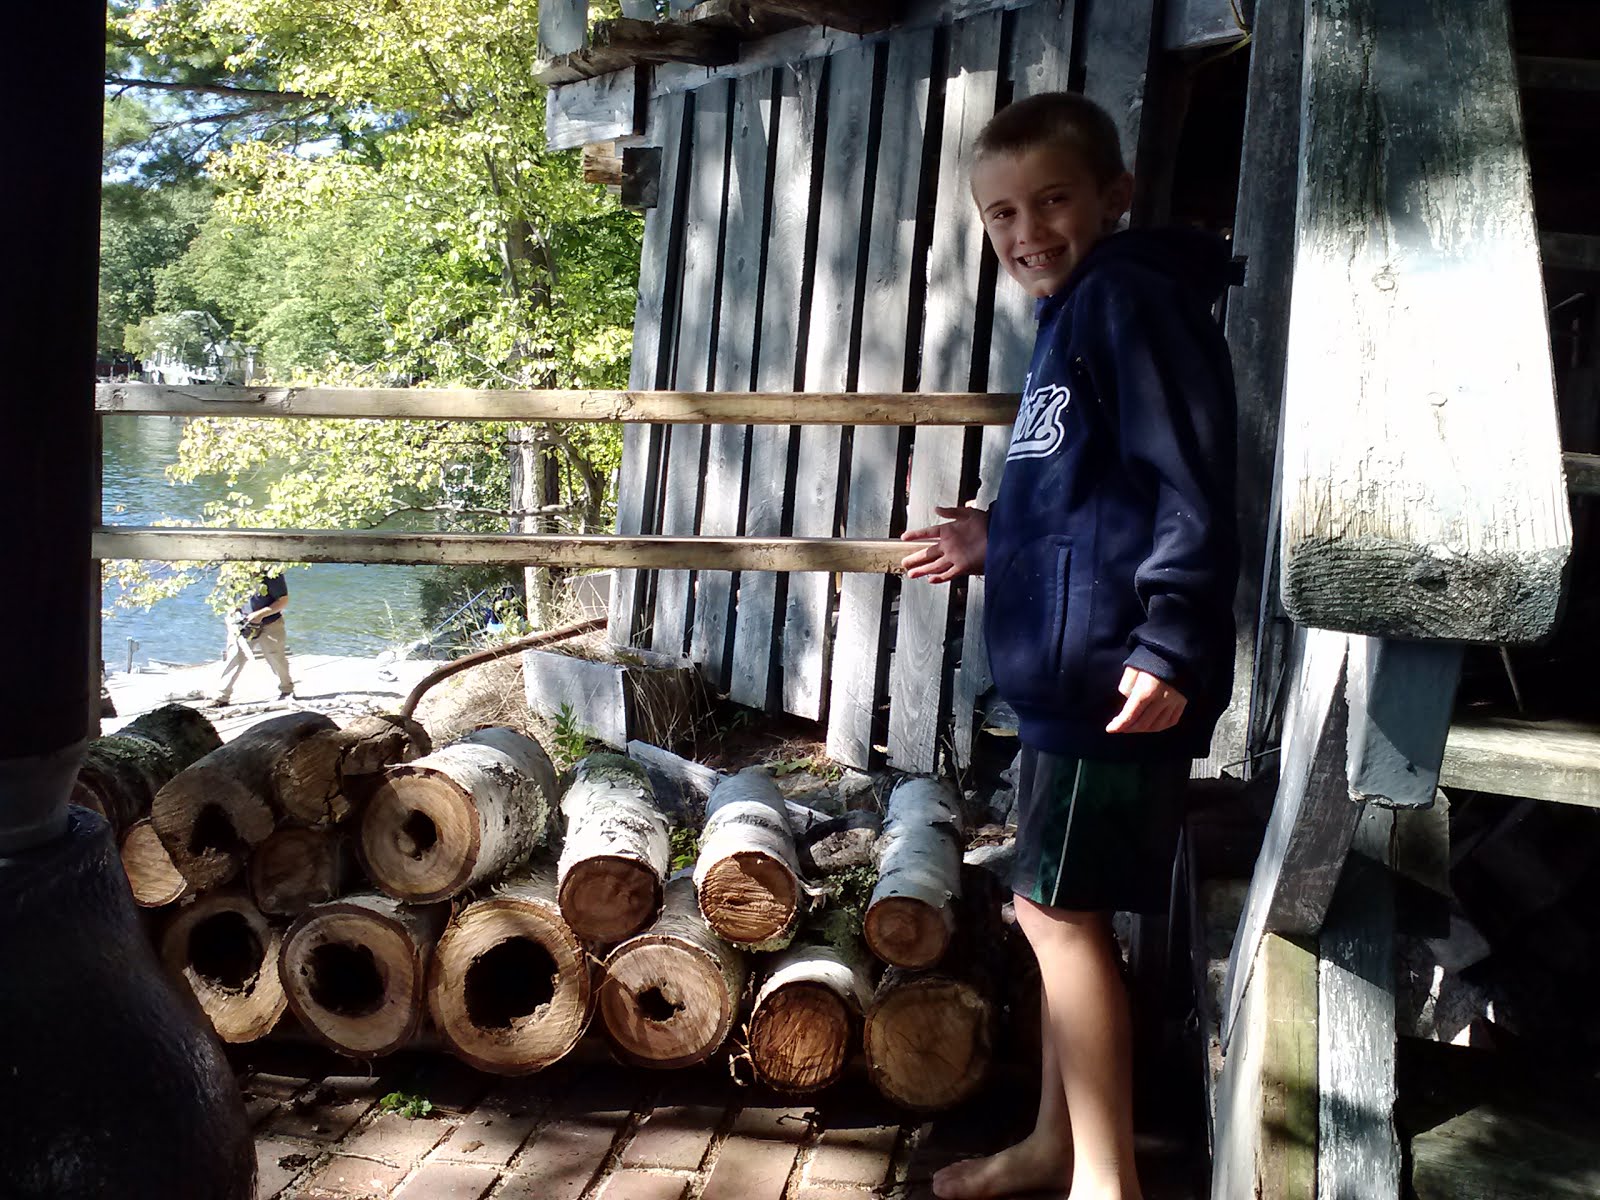 Jonas making progress on the wood pile